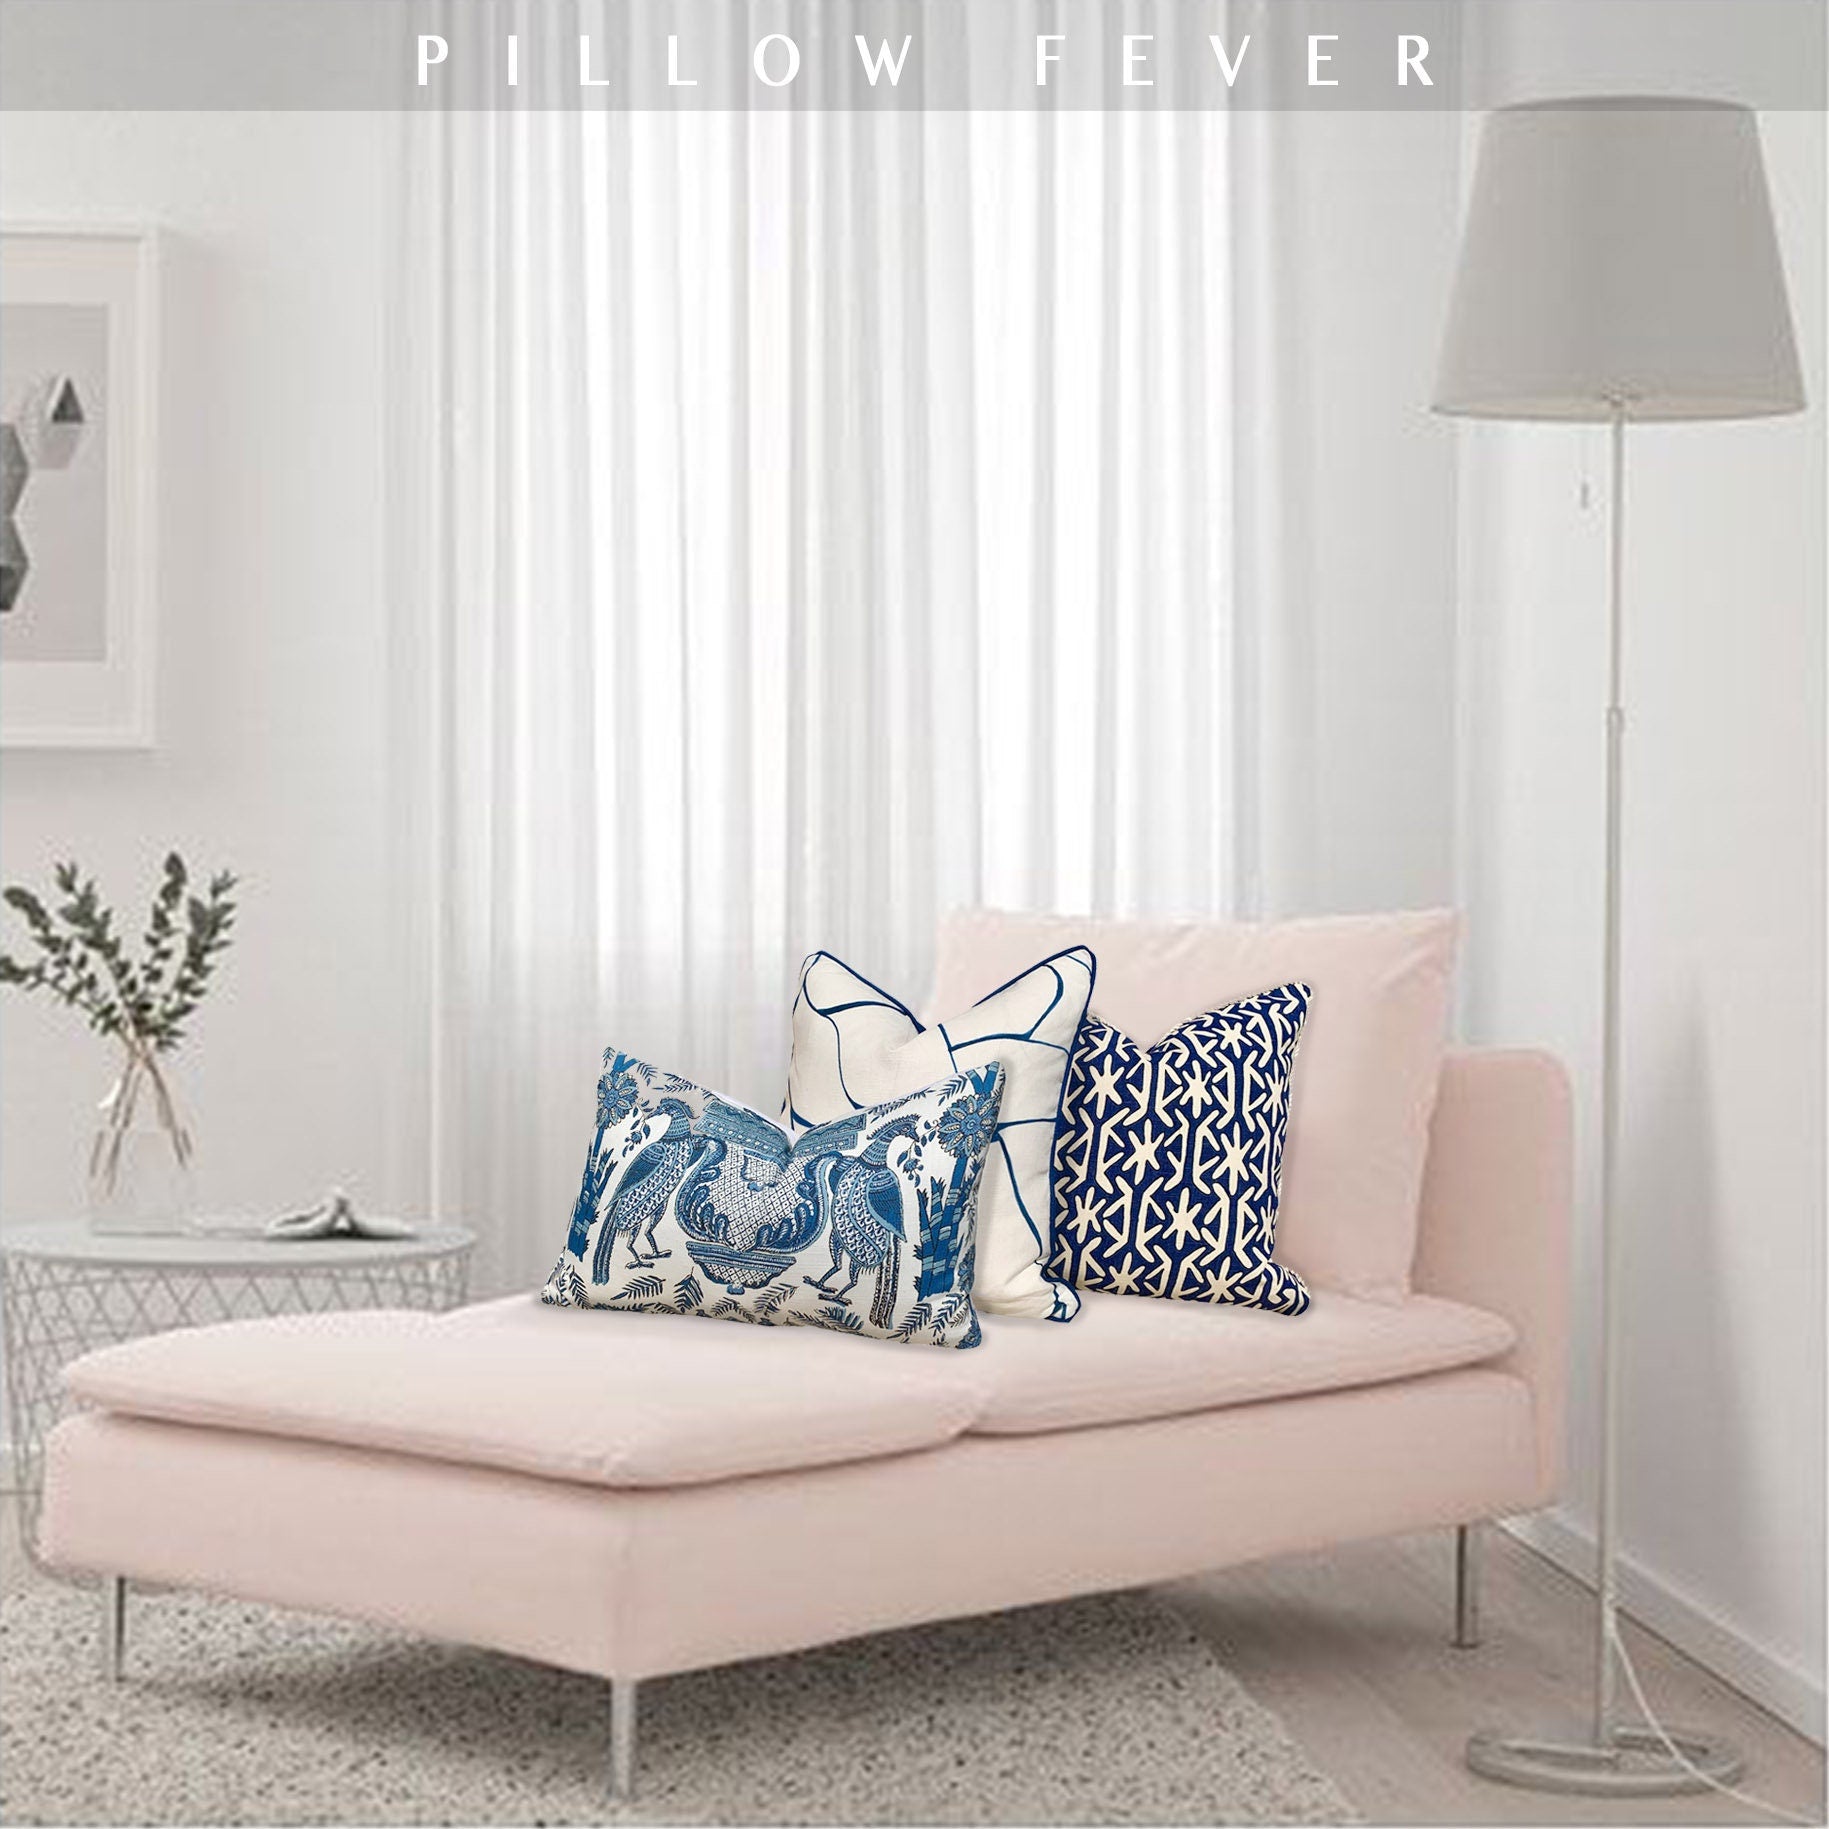 Thibaut Palampore Pillow in Blue and White. Lumbar Decorative Bird Pillow. Designer Pillows, accent cushion, decorative pillow cover